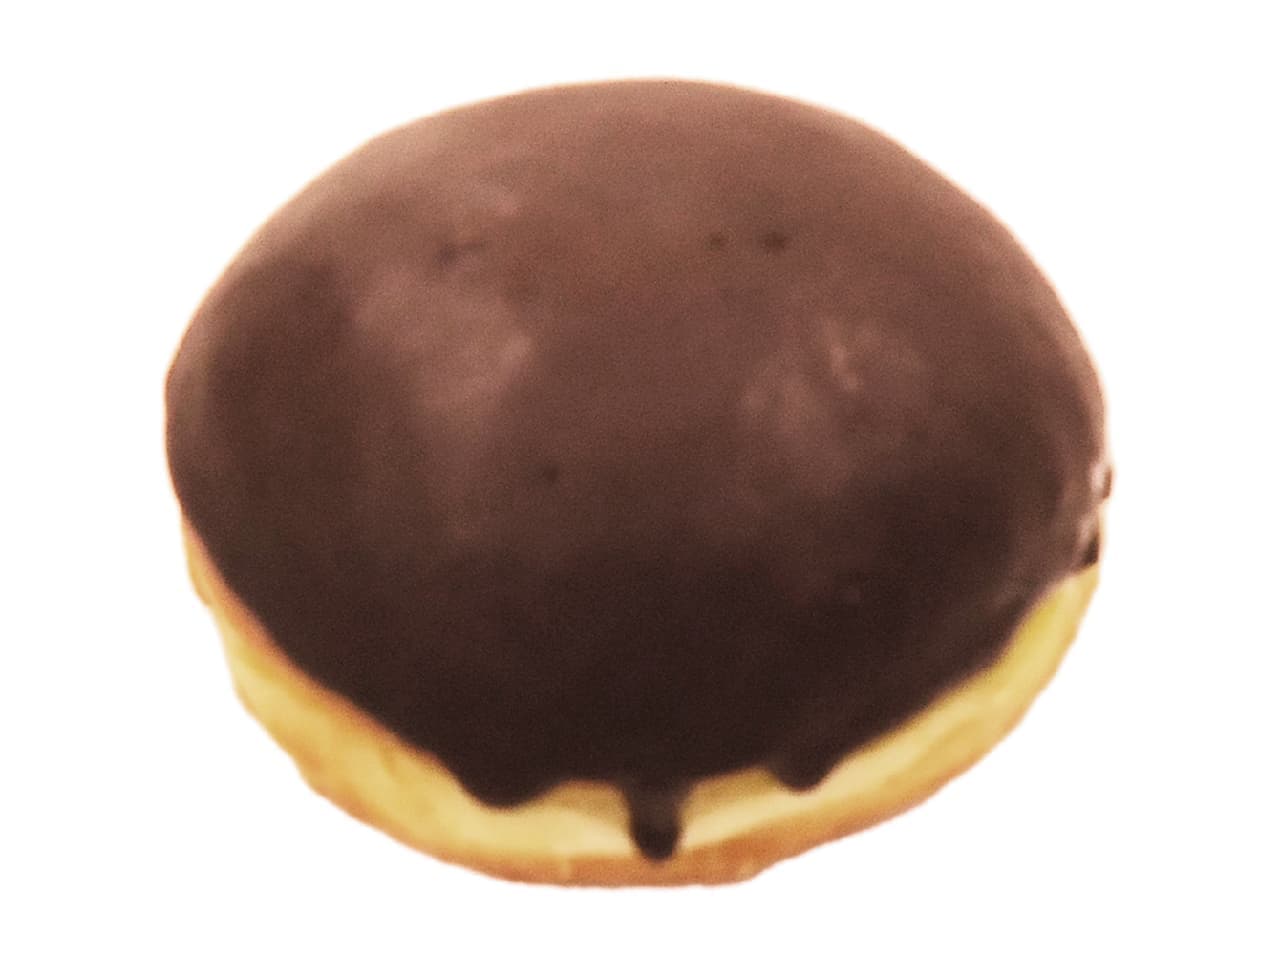 7-ELEVEN "Boston Donut Chocolate & Custard